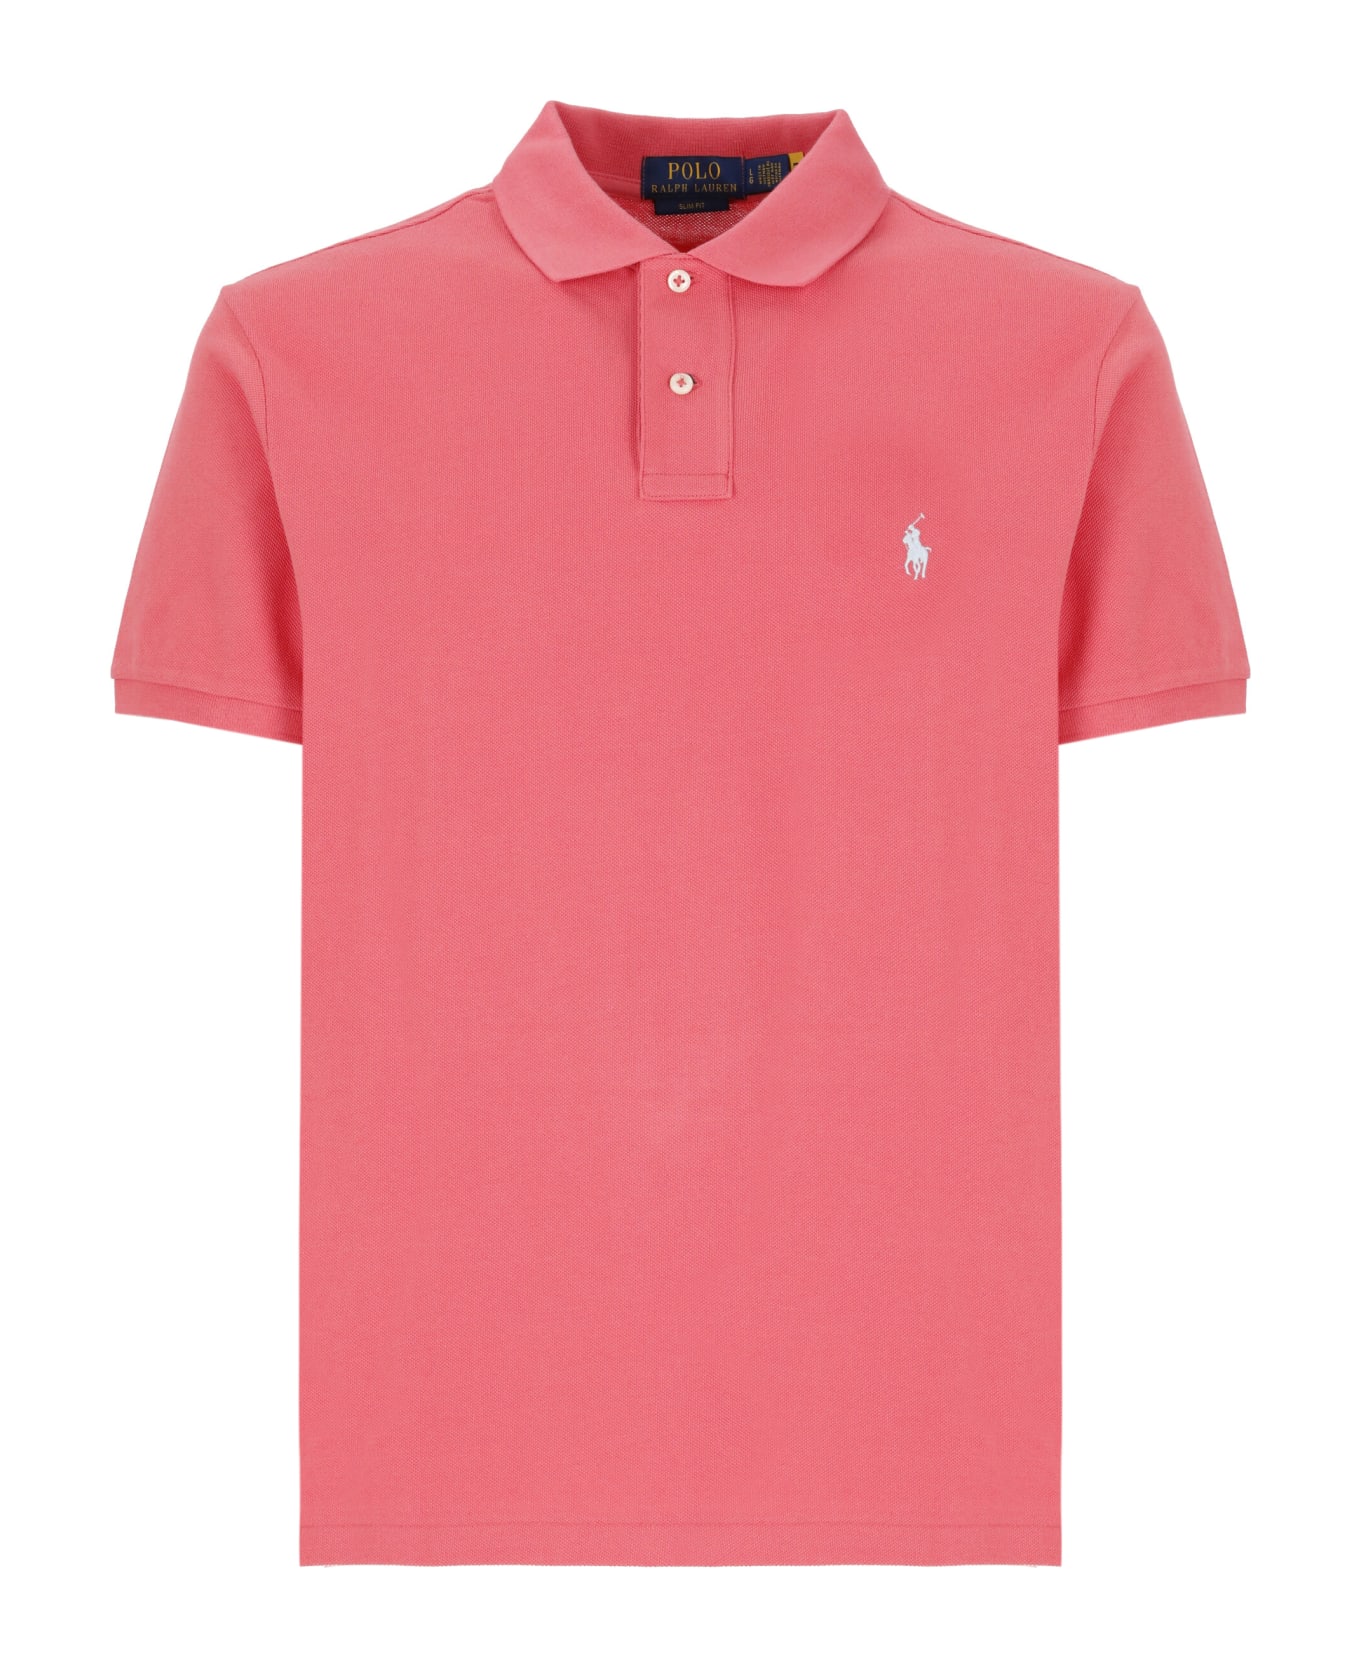 Polo Ralph Lauren Pony Shirt - Red ポロシャツ